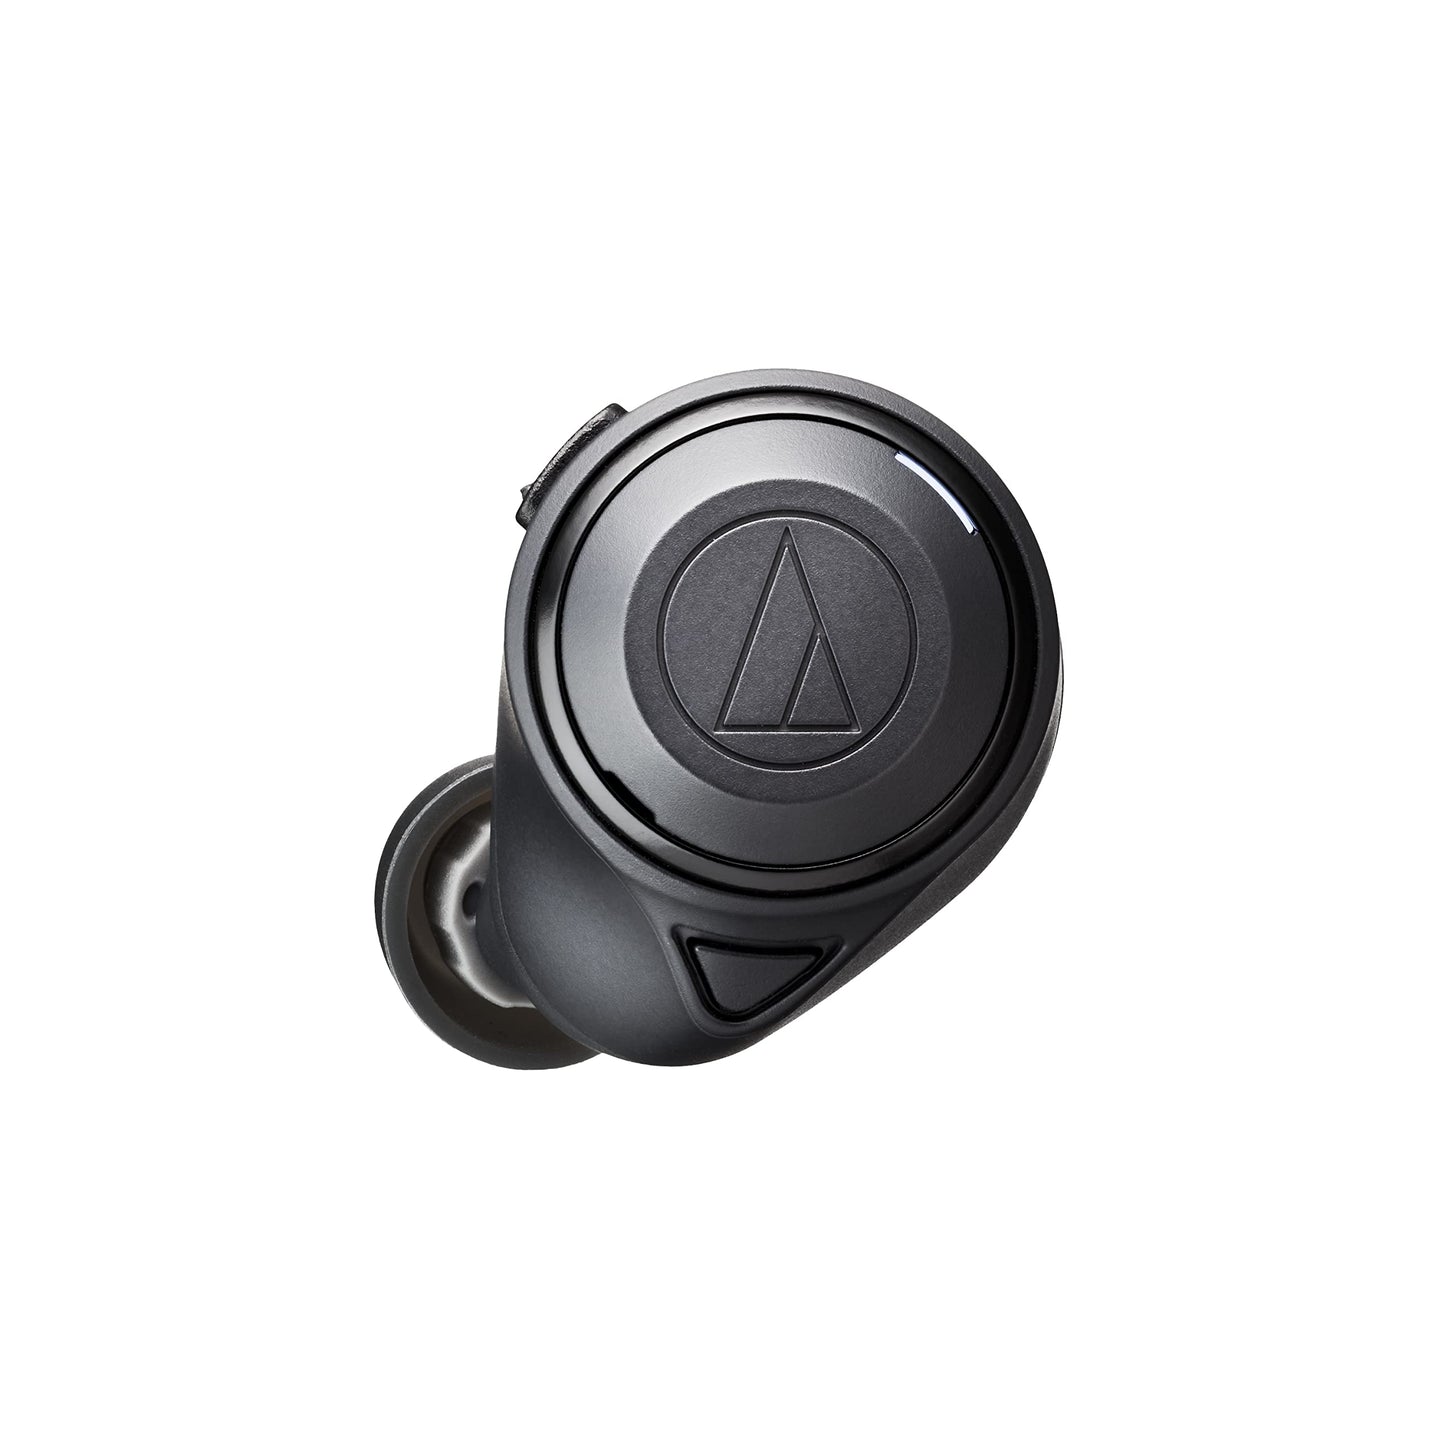 Audio-Technica ATH-CKS50TW Wireless in-Ear Headphones, Black